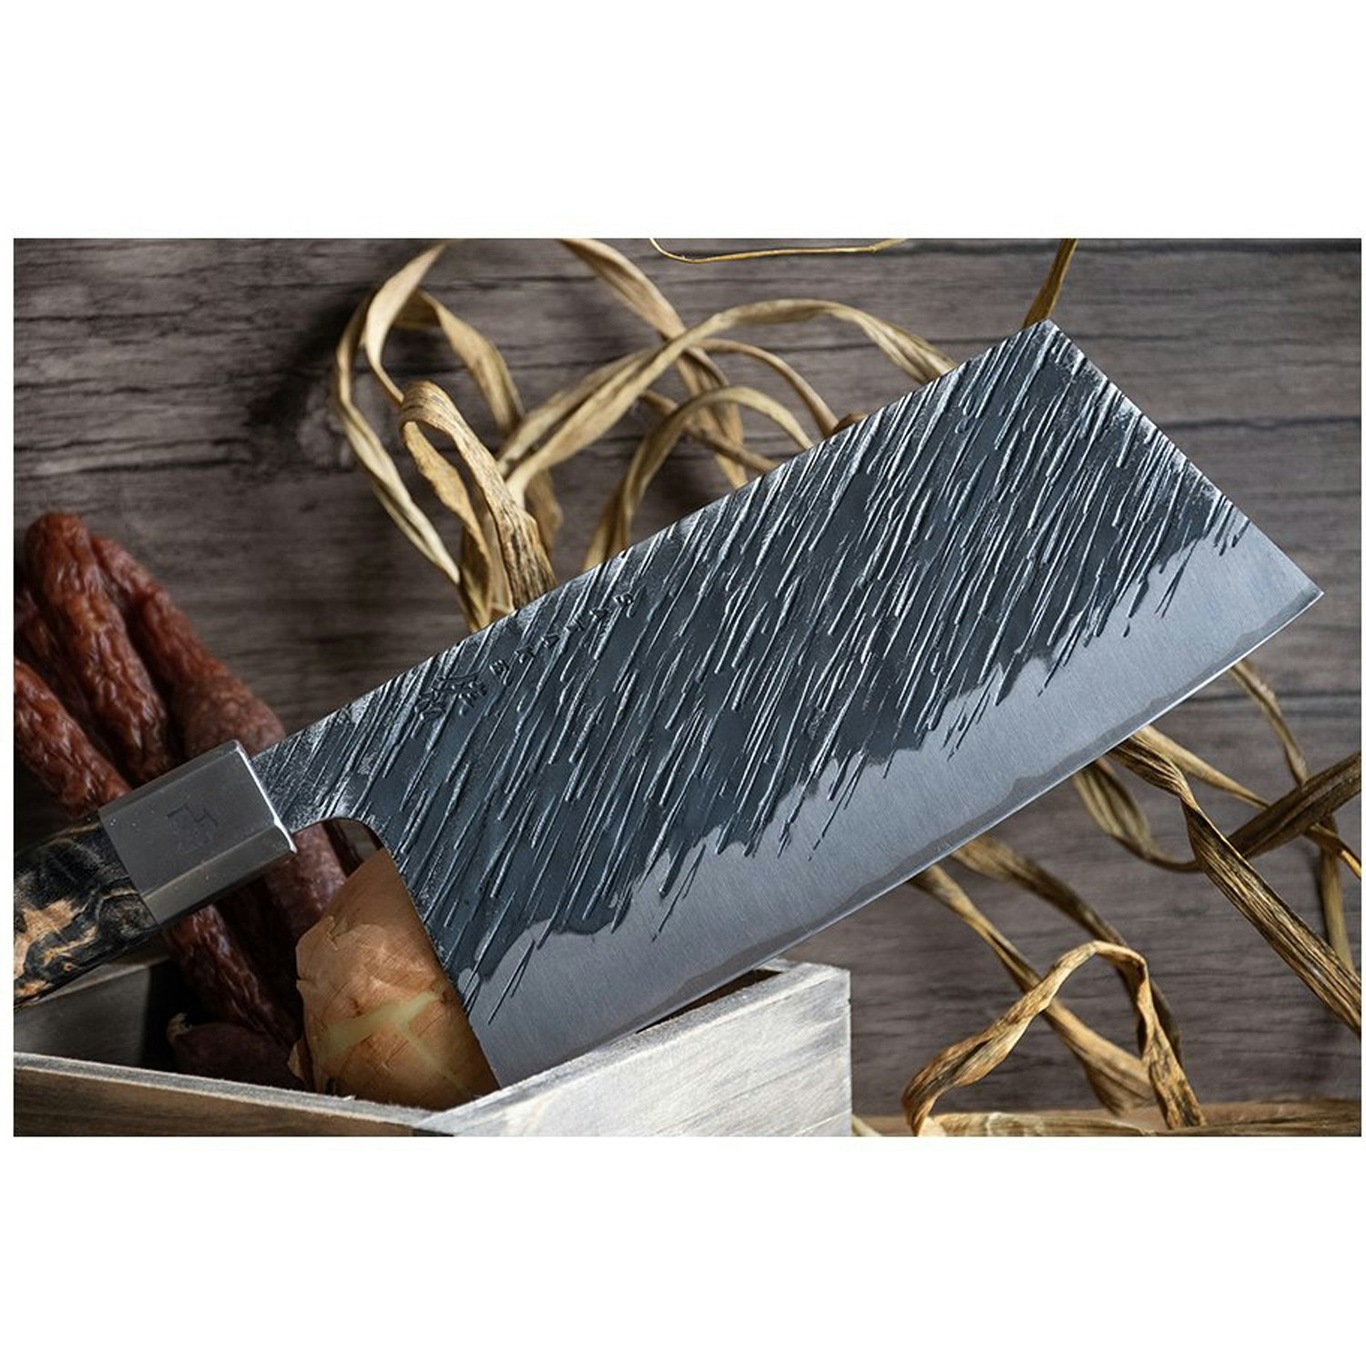 https://royaldesign.com/image/2/satake-ame-chinese-chef-knife-17-cm-4?w=800&quality=80